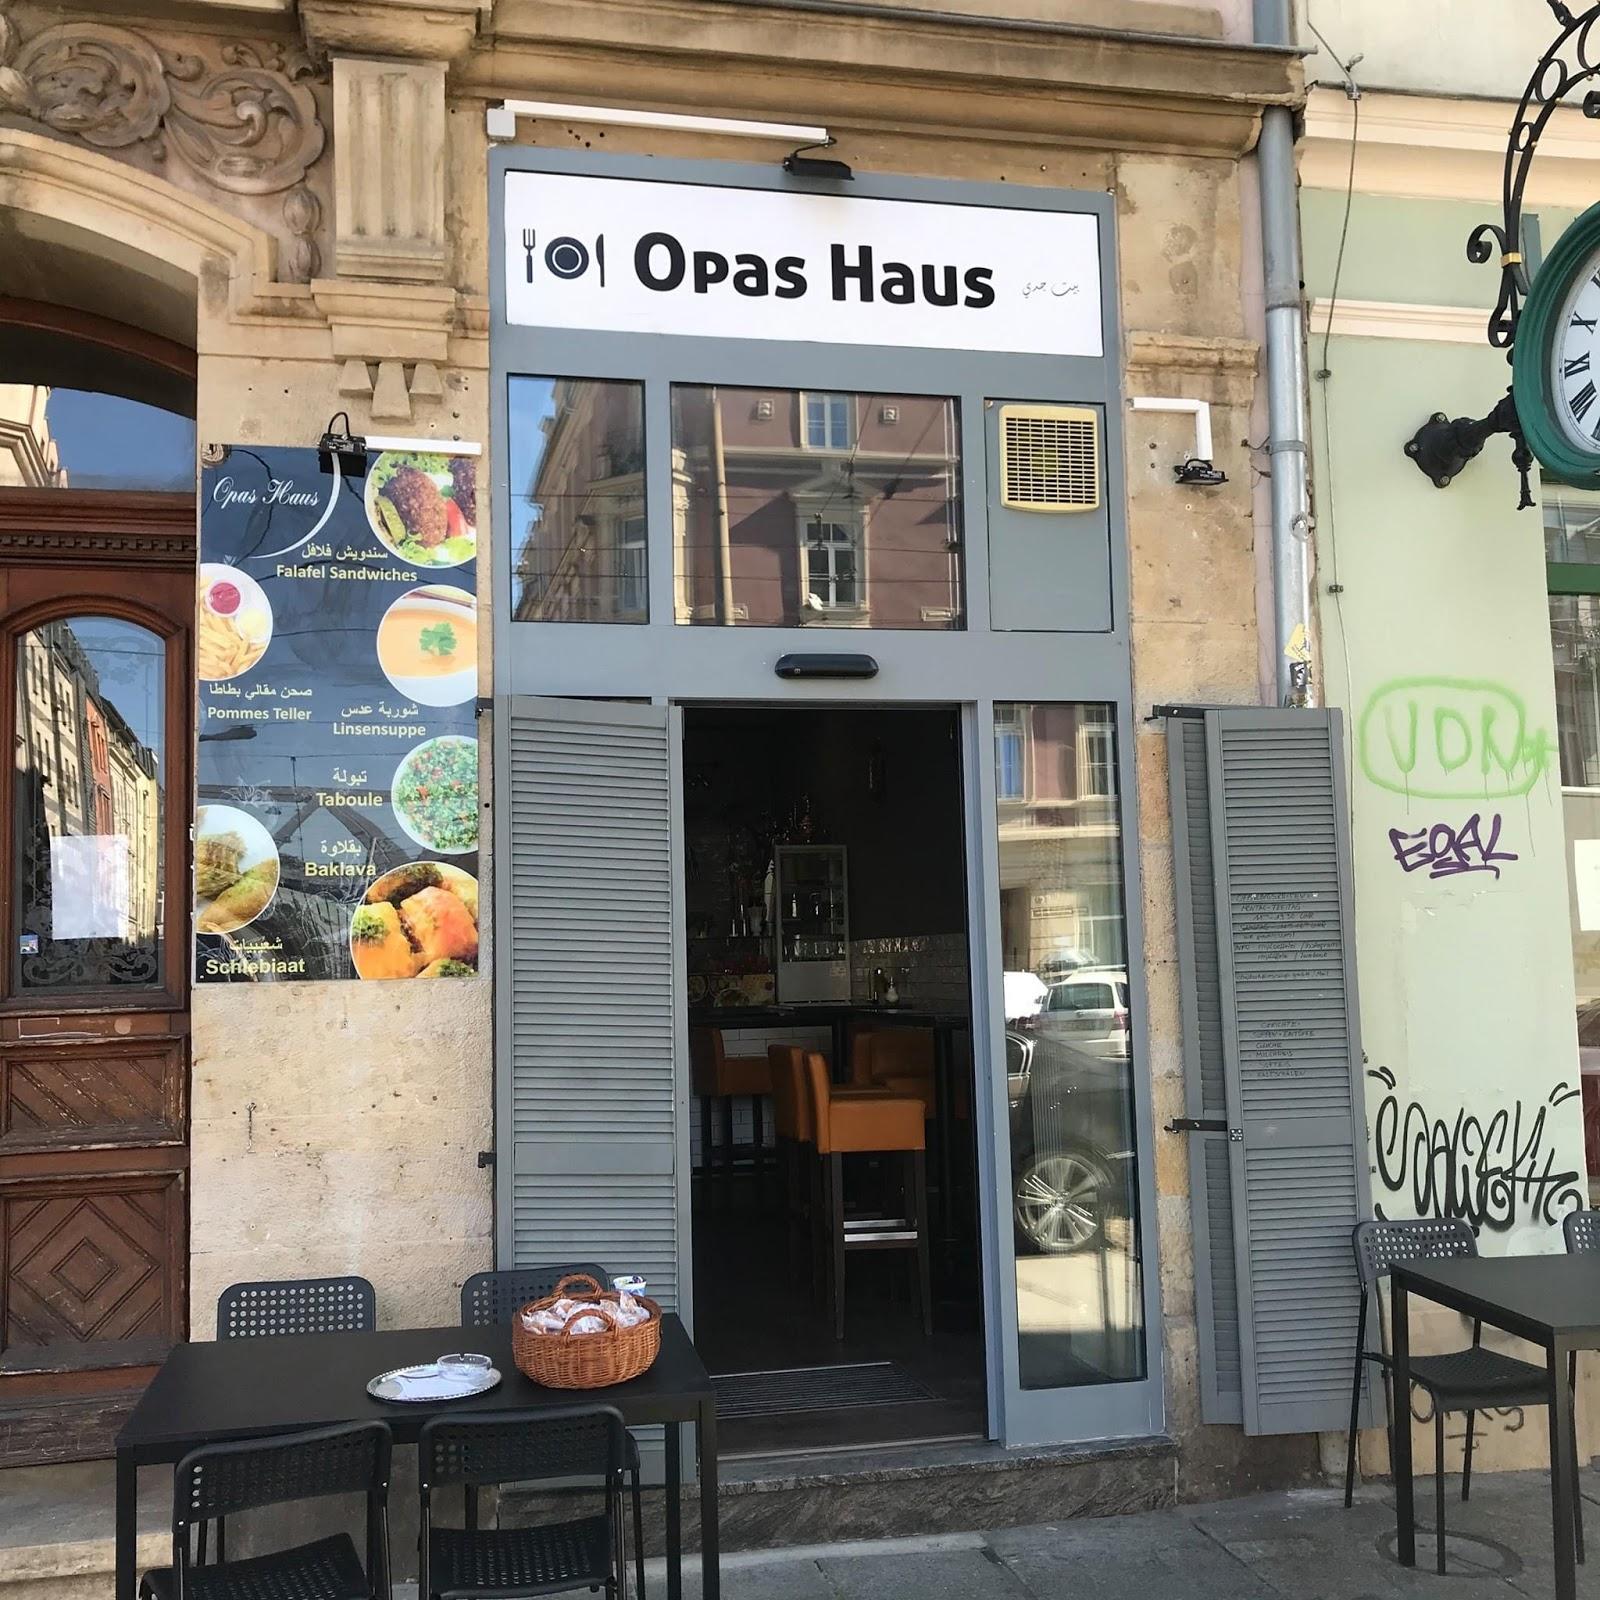 Restaurant "Opas Haus Restaurant" in Dresden